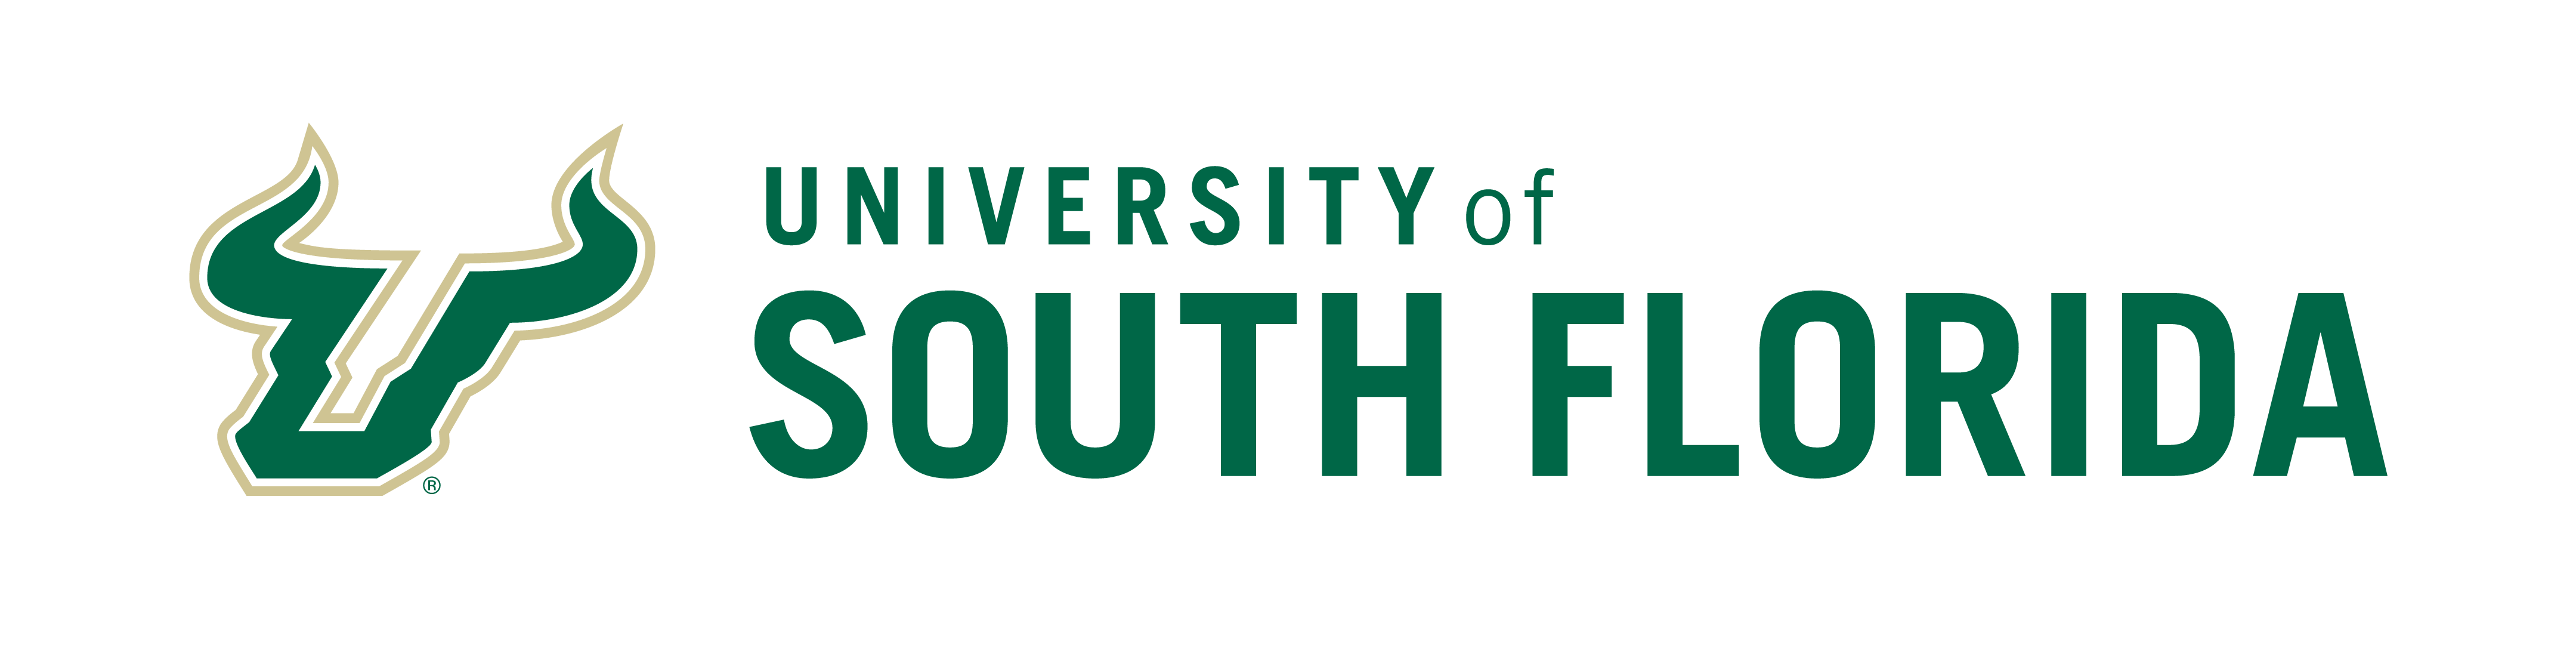 USouthFlorida-green-logo